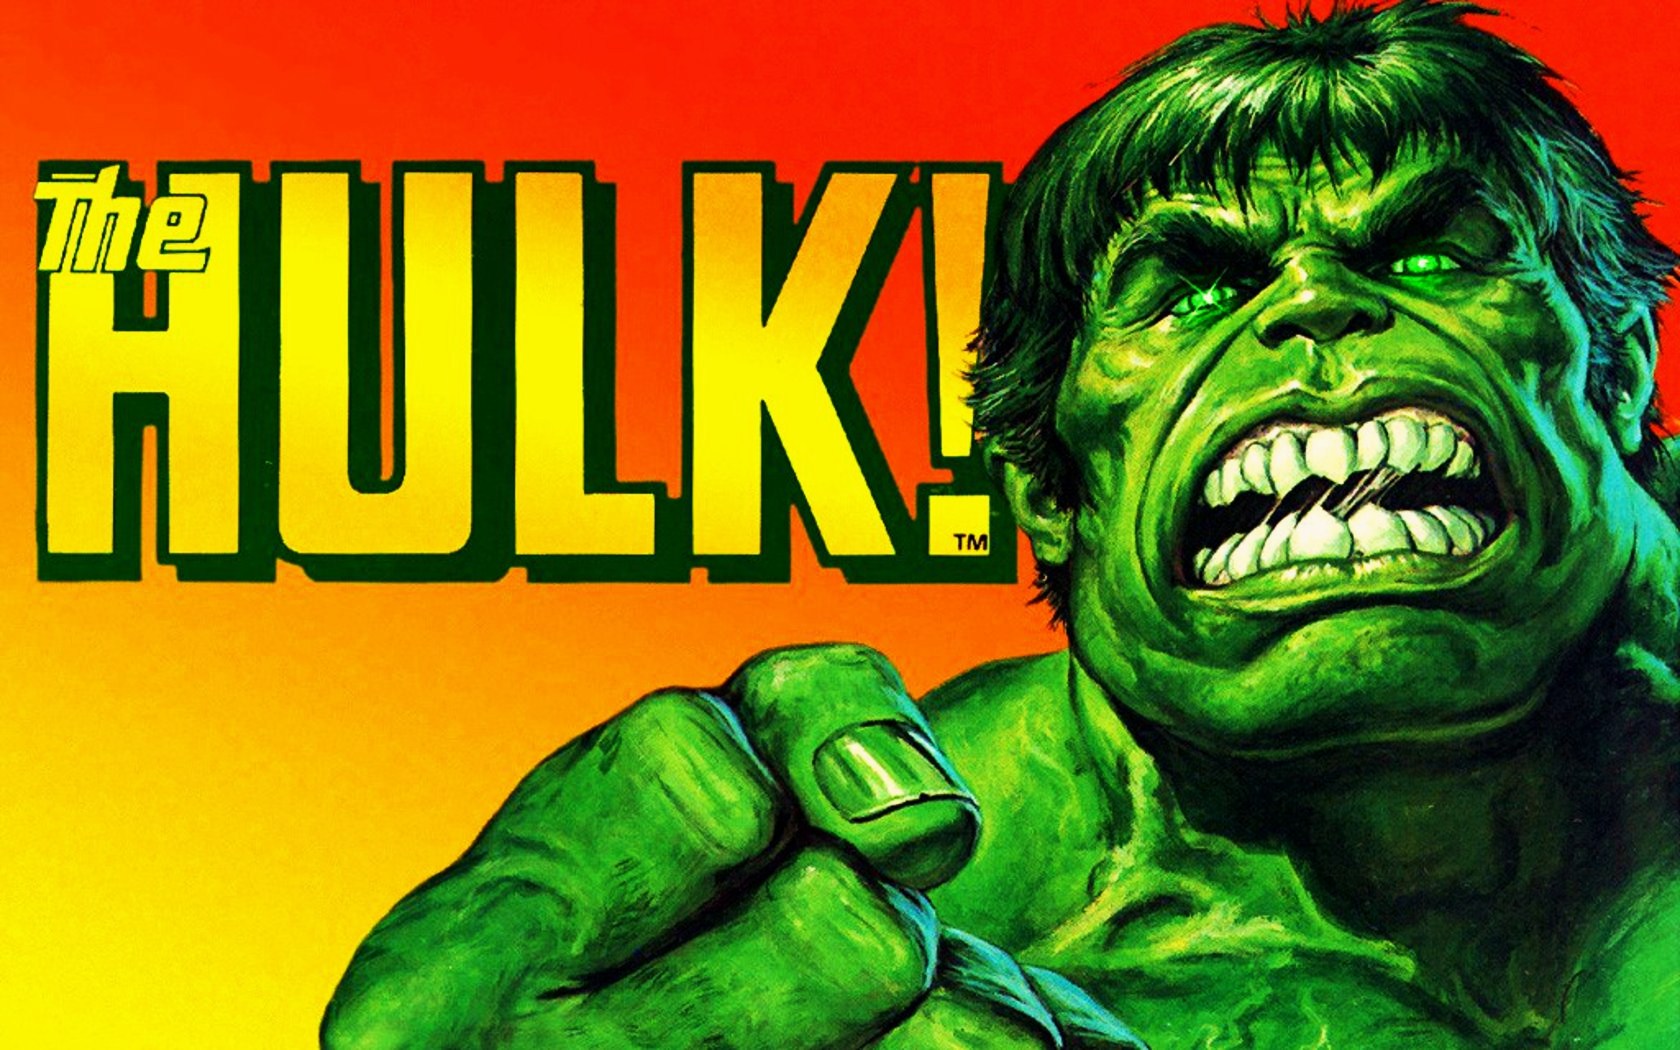 The Hulk Wallpaper - The Incredible Hulk Wallpaper (31051334) - Fanpop